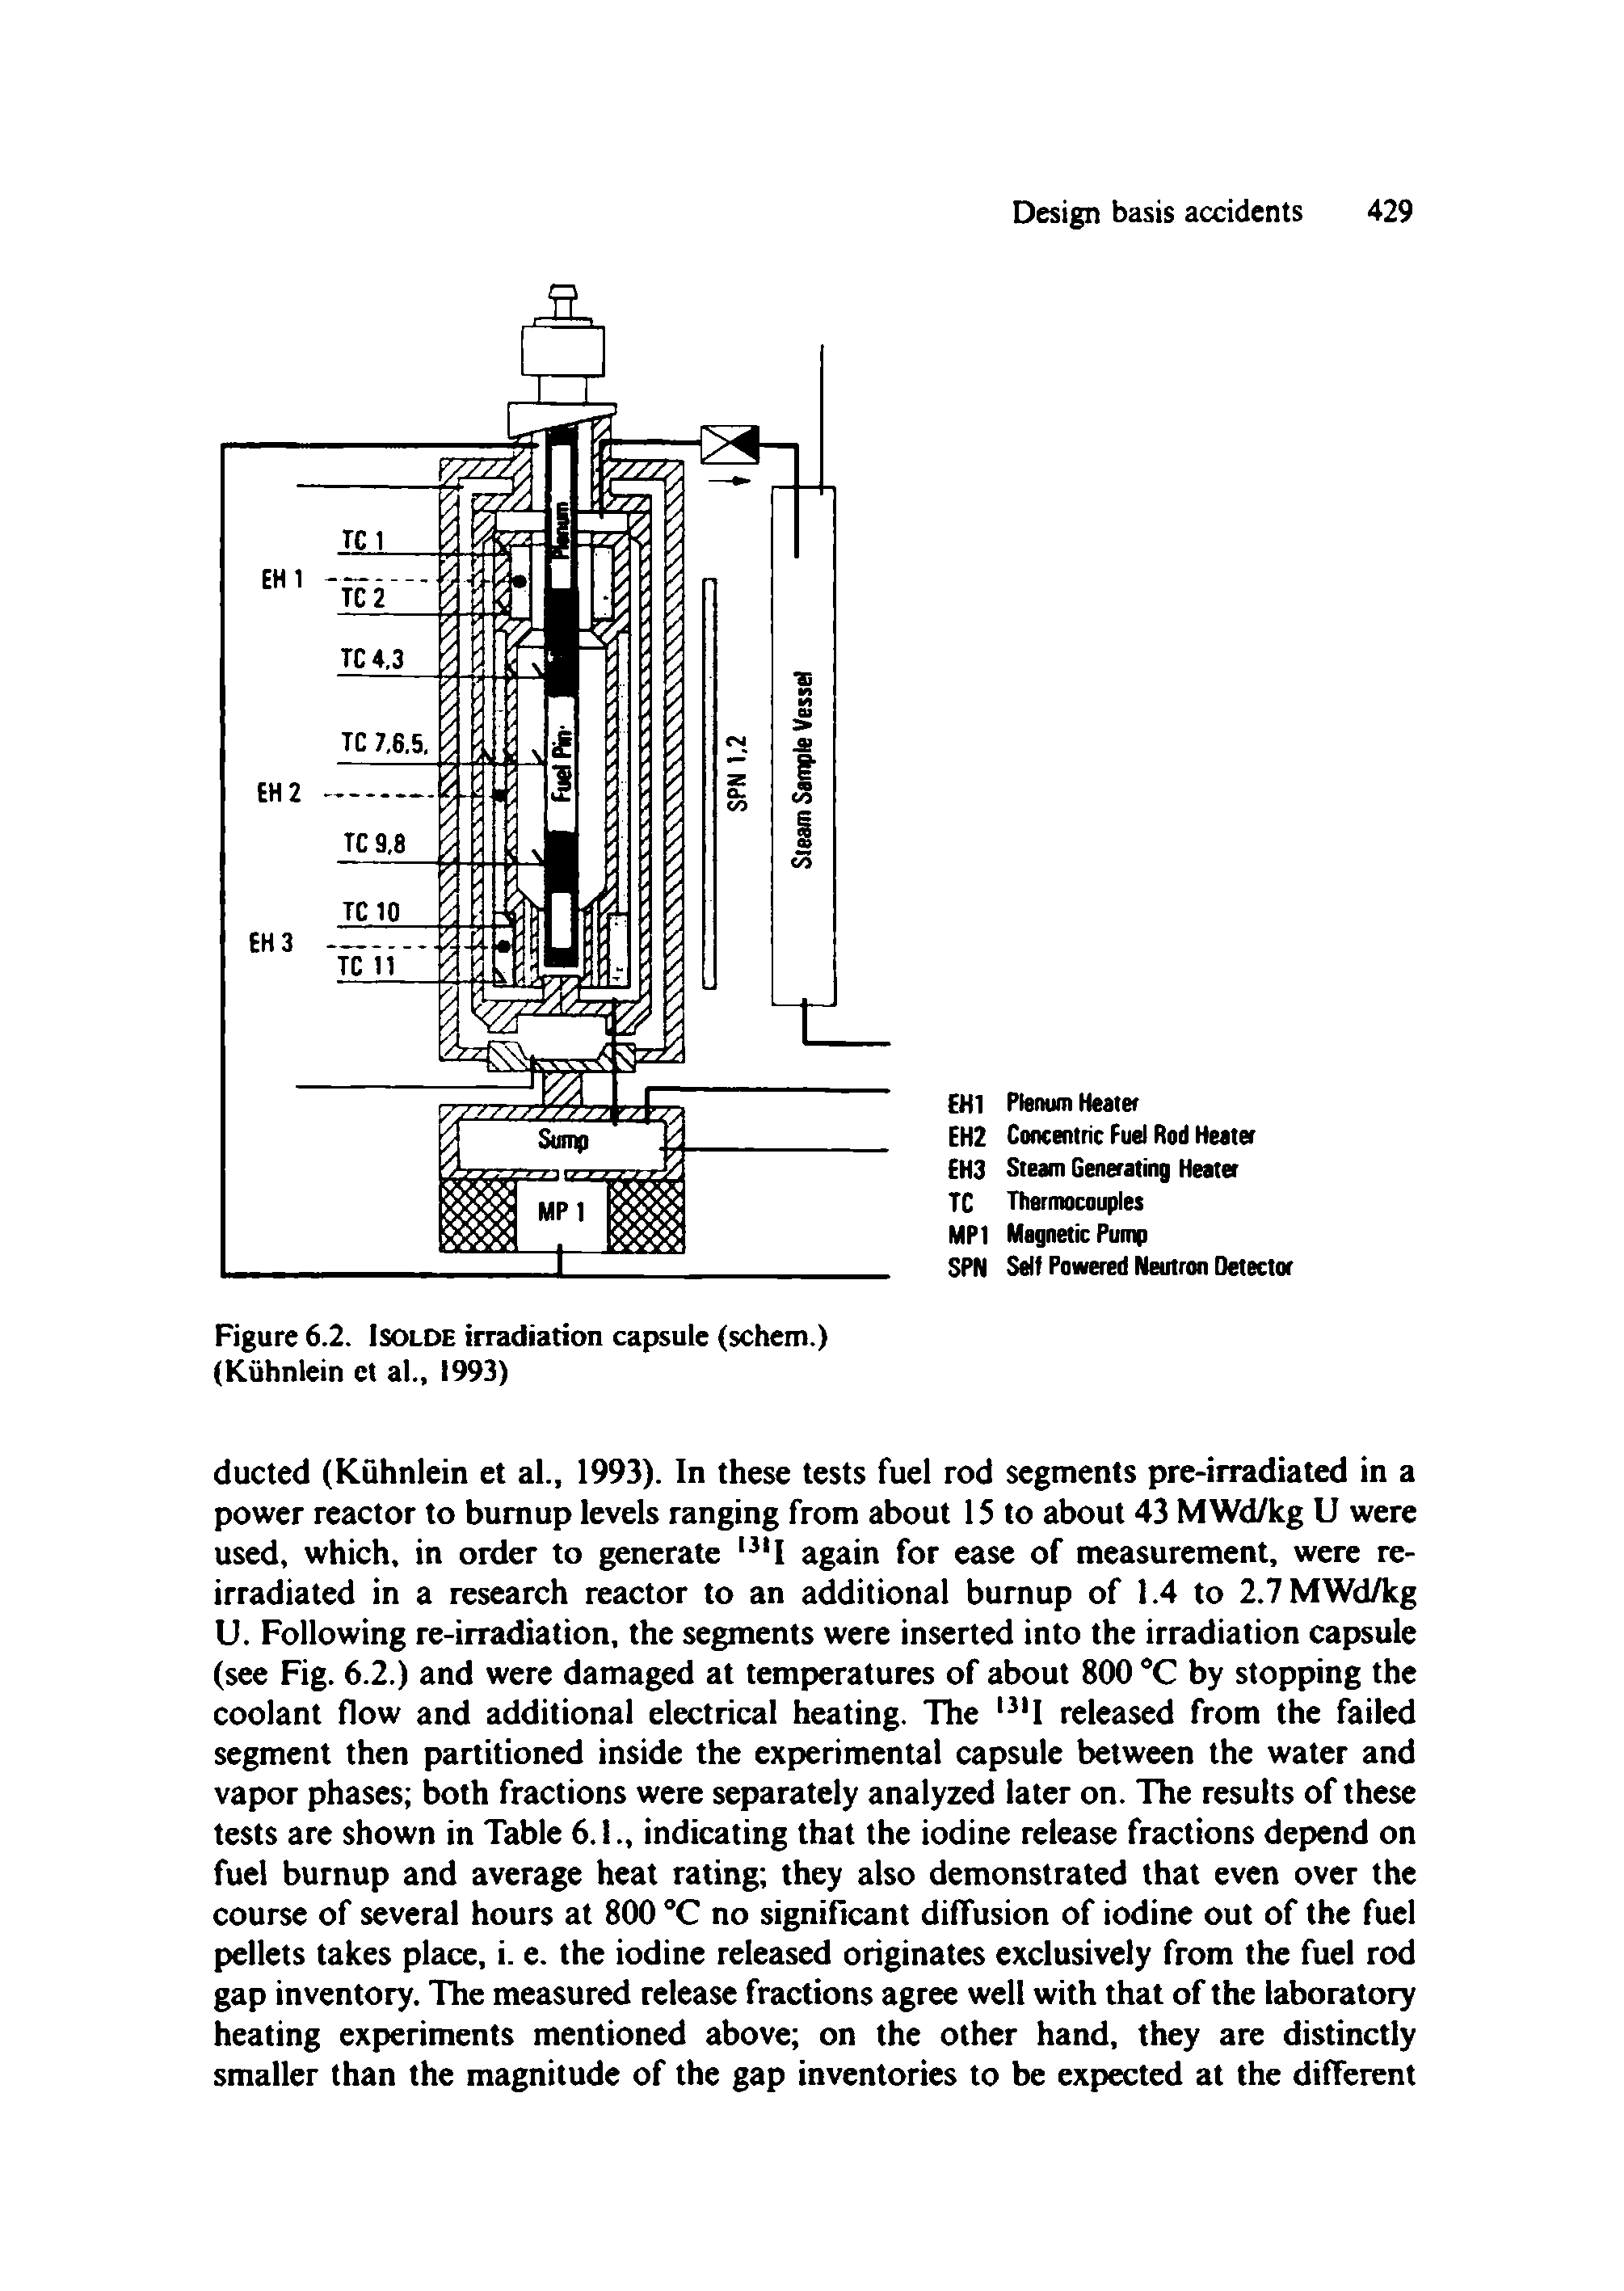 Figure 6.2. Isolde irradiation capsule (schem.) (Kiihnlein et al., 1993)...